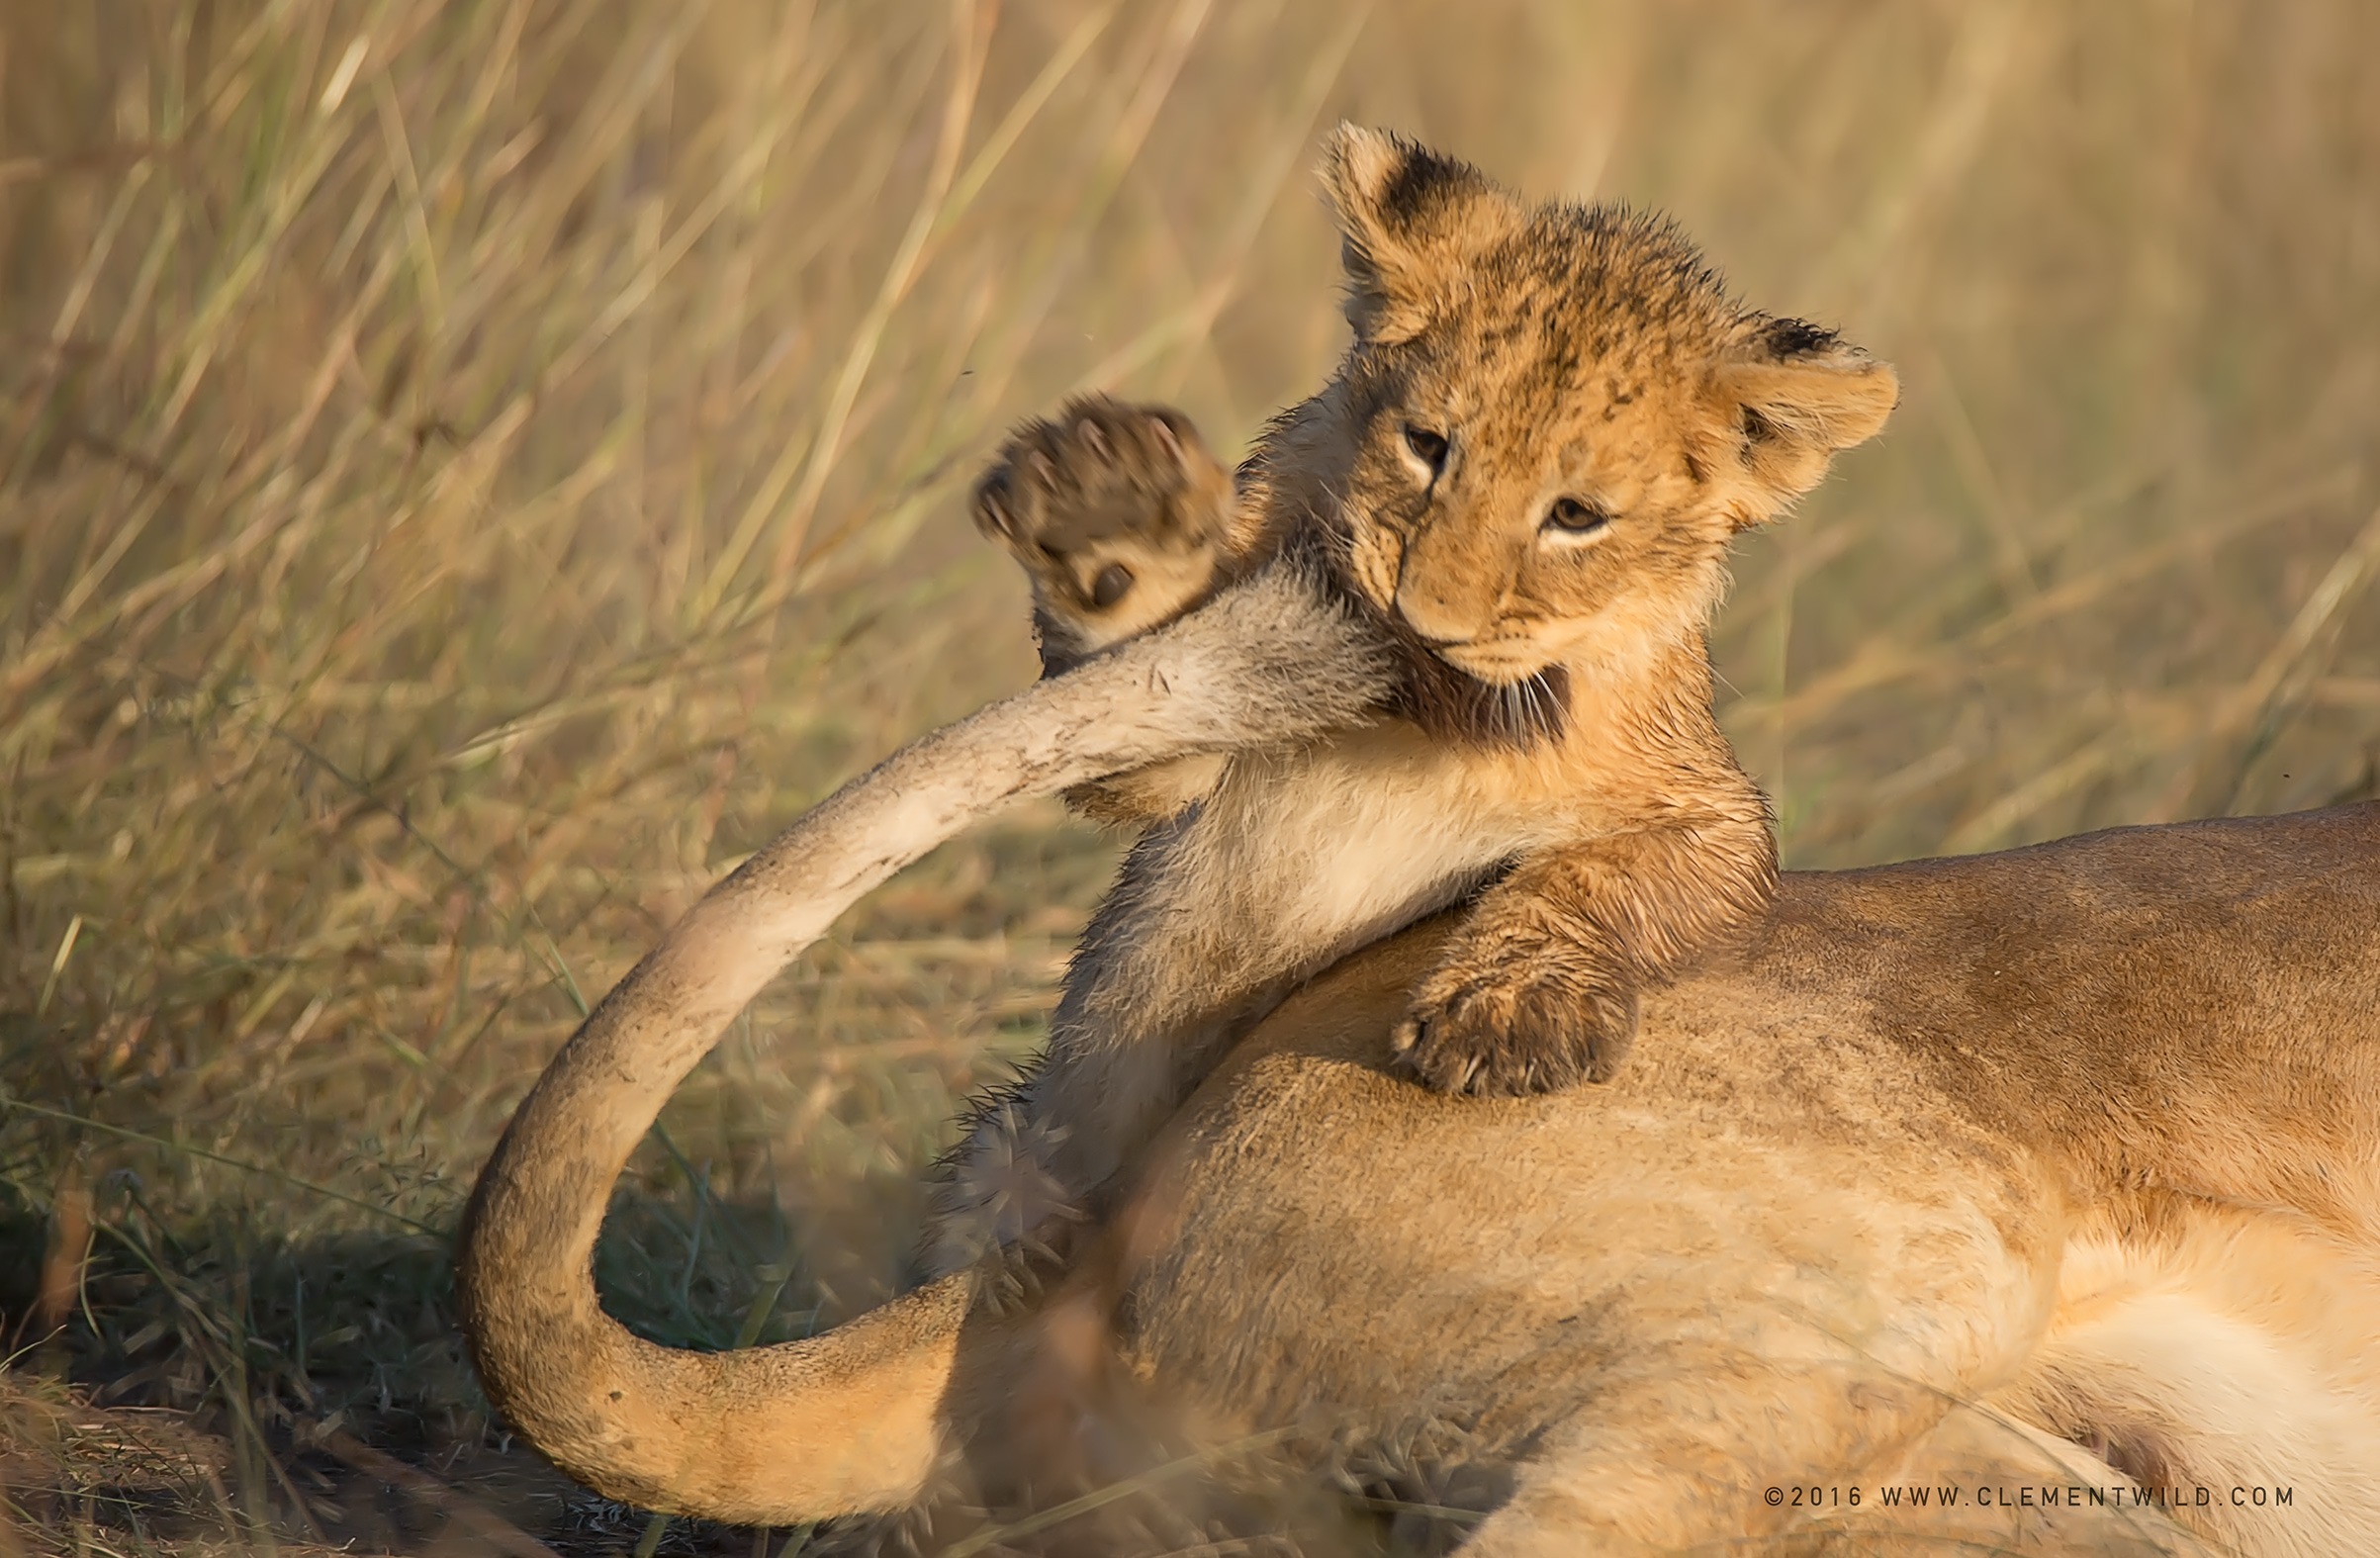 Great Wildebeest Migration, Wildlife Photography, Photographic Safaris, Clement Wild, Masai Mara